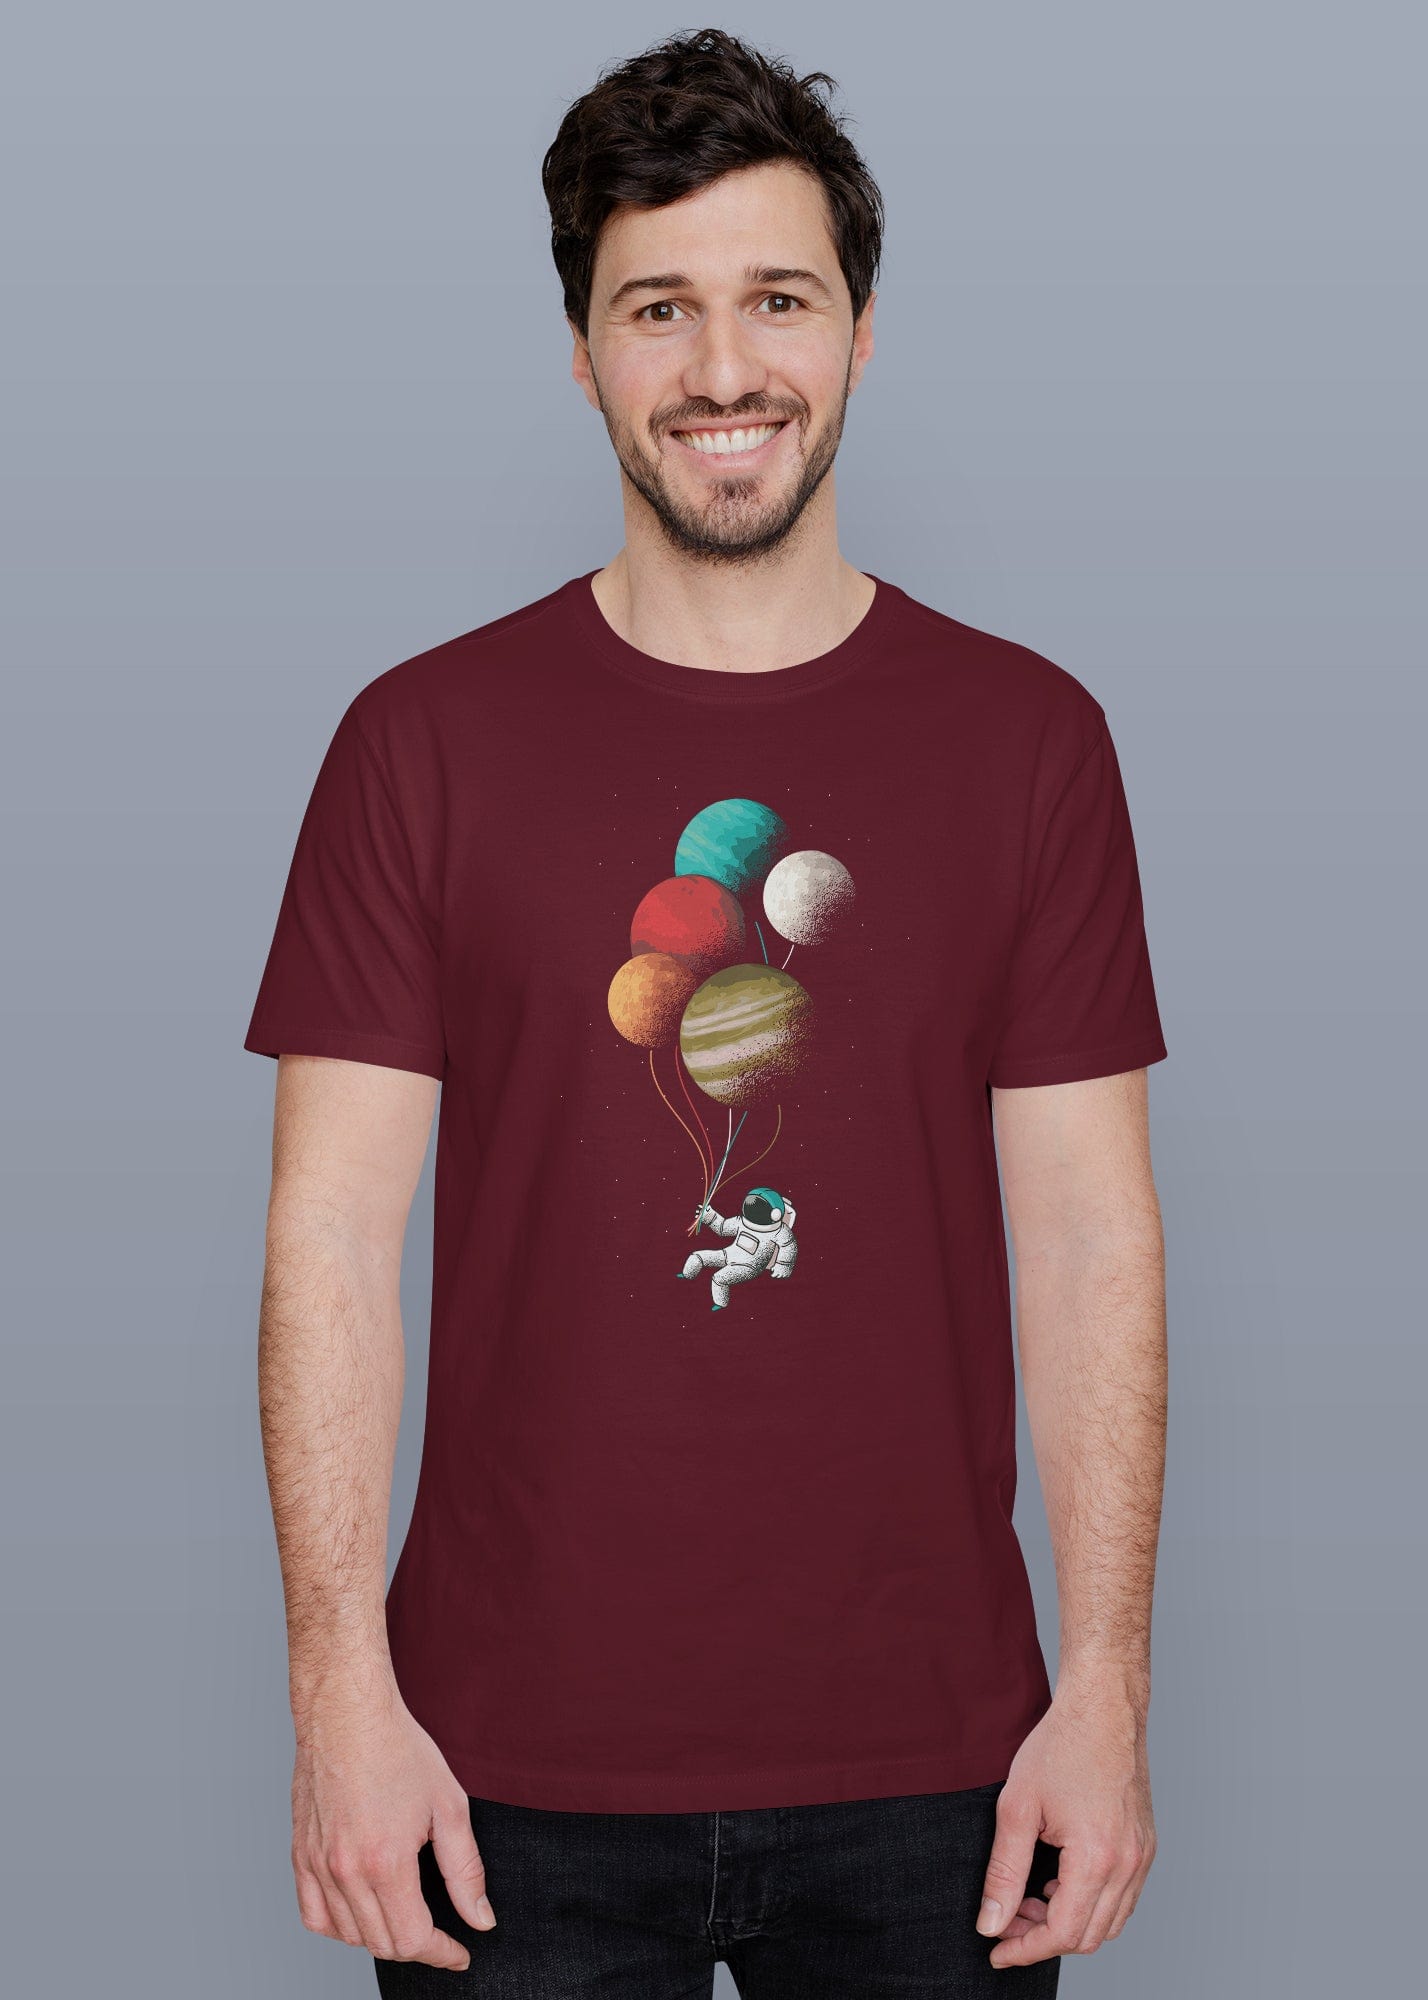 Astronaut Balloon Printed Half Sleeve Premium Cotton T-shirt For Men